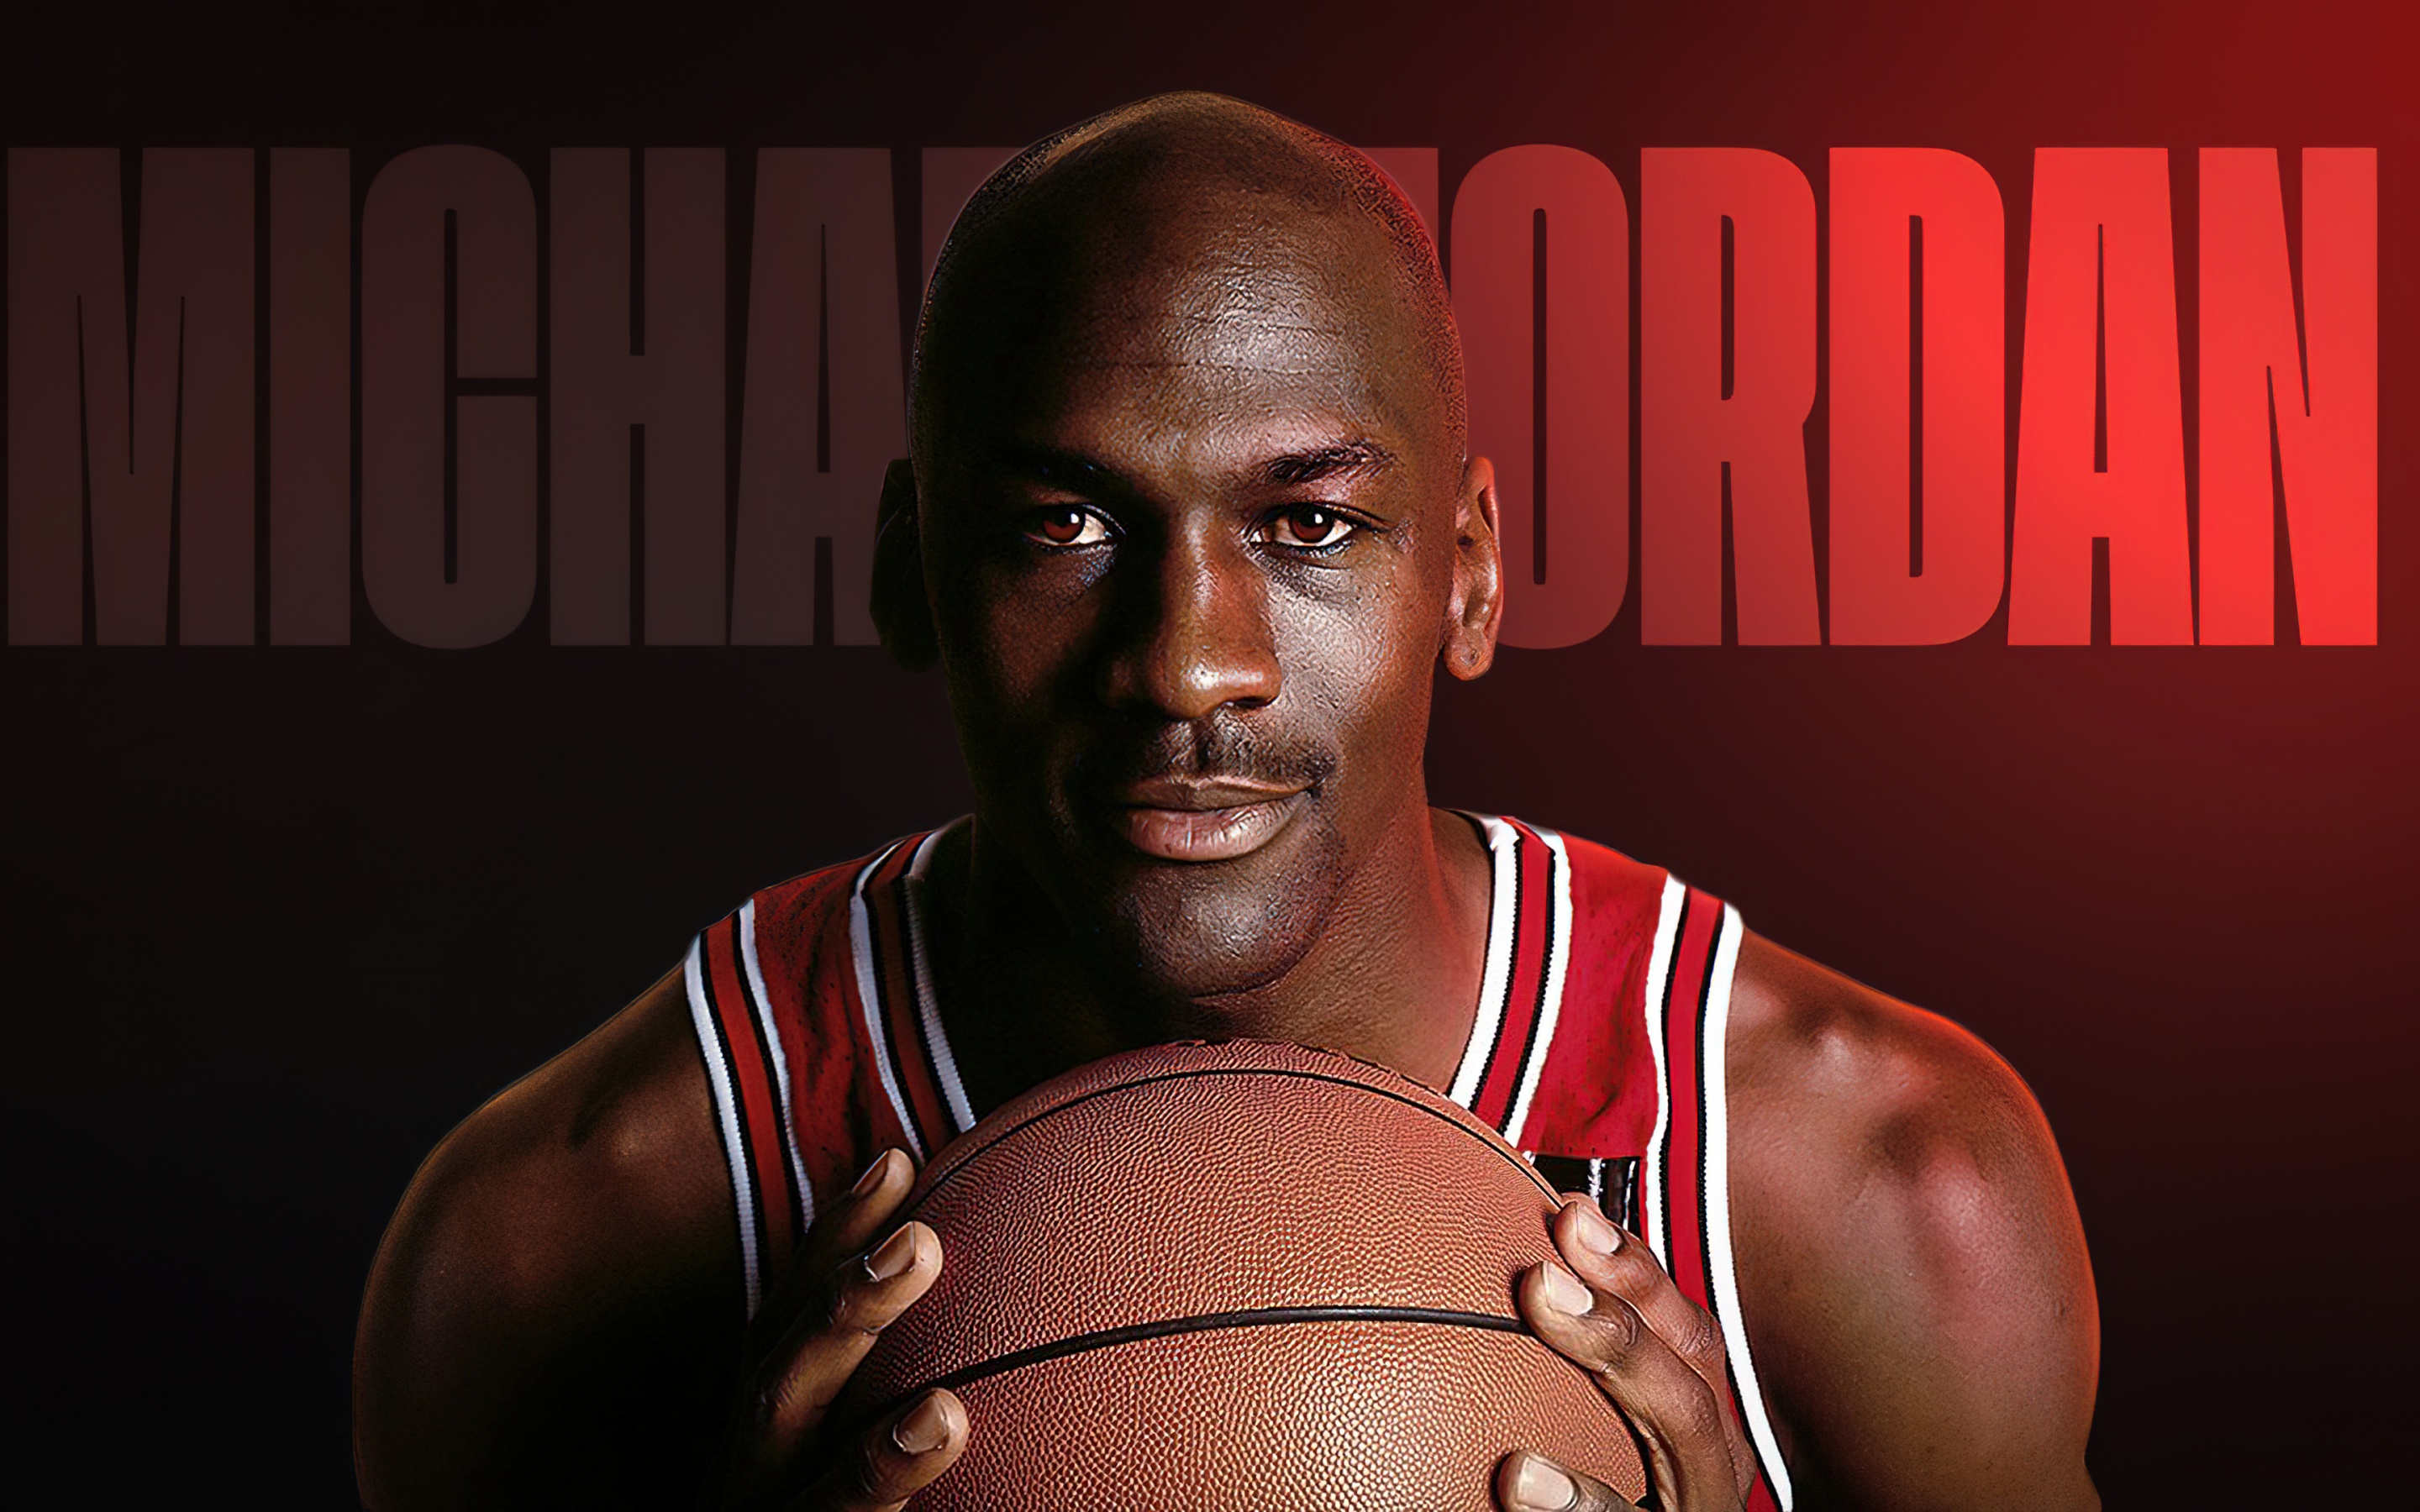 Michael Jordan Wallpaper 4K, Basketball player